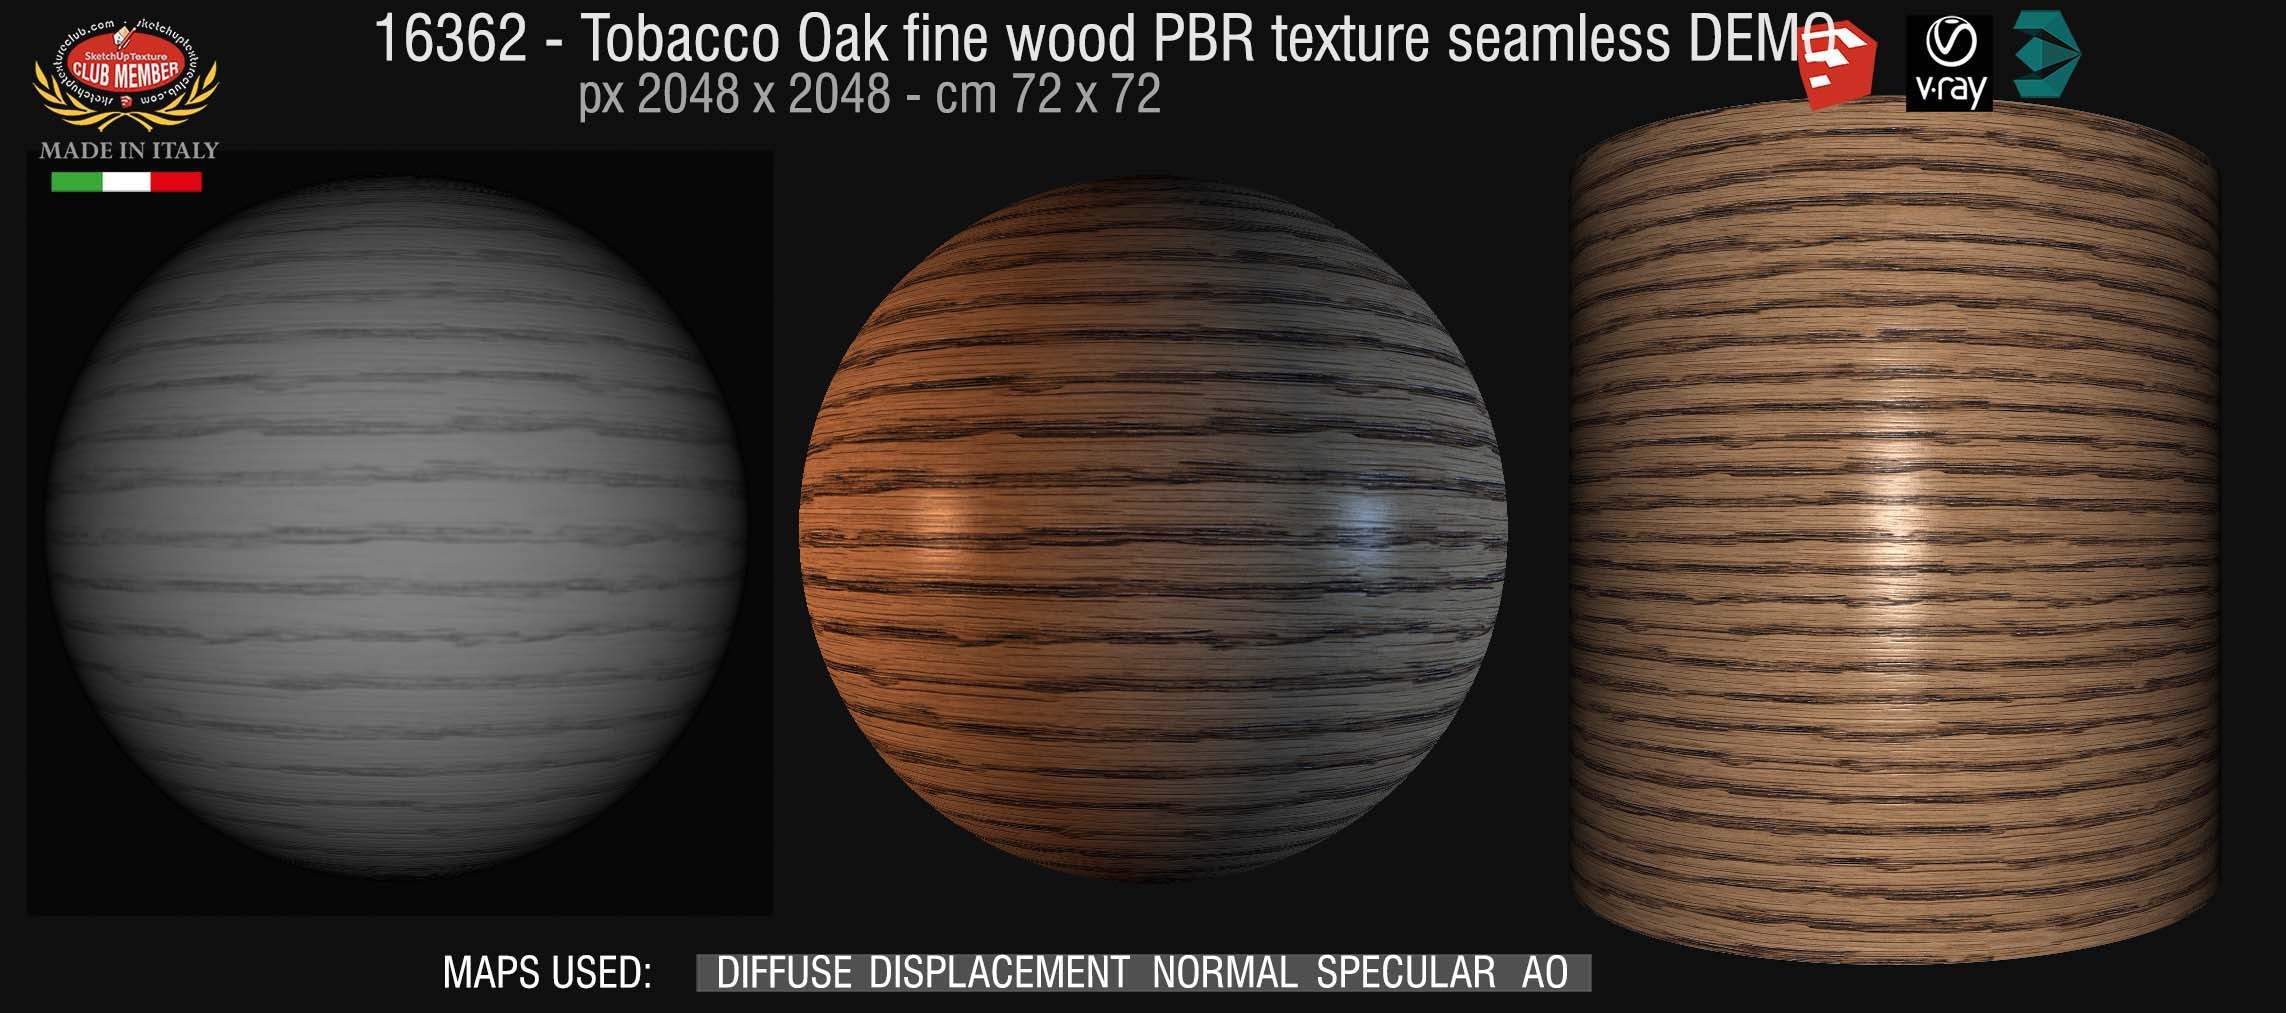 16362 Tobacco oak fine wood PBR texture seamless DEMO